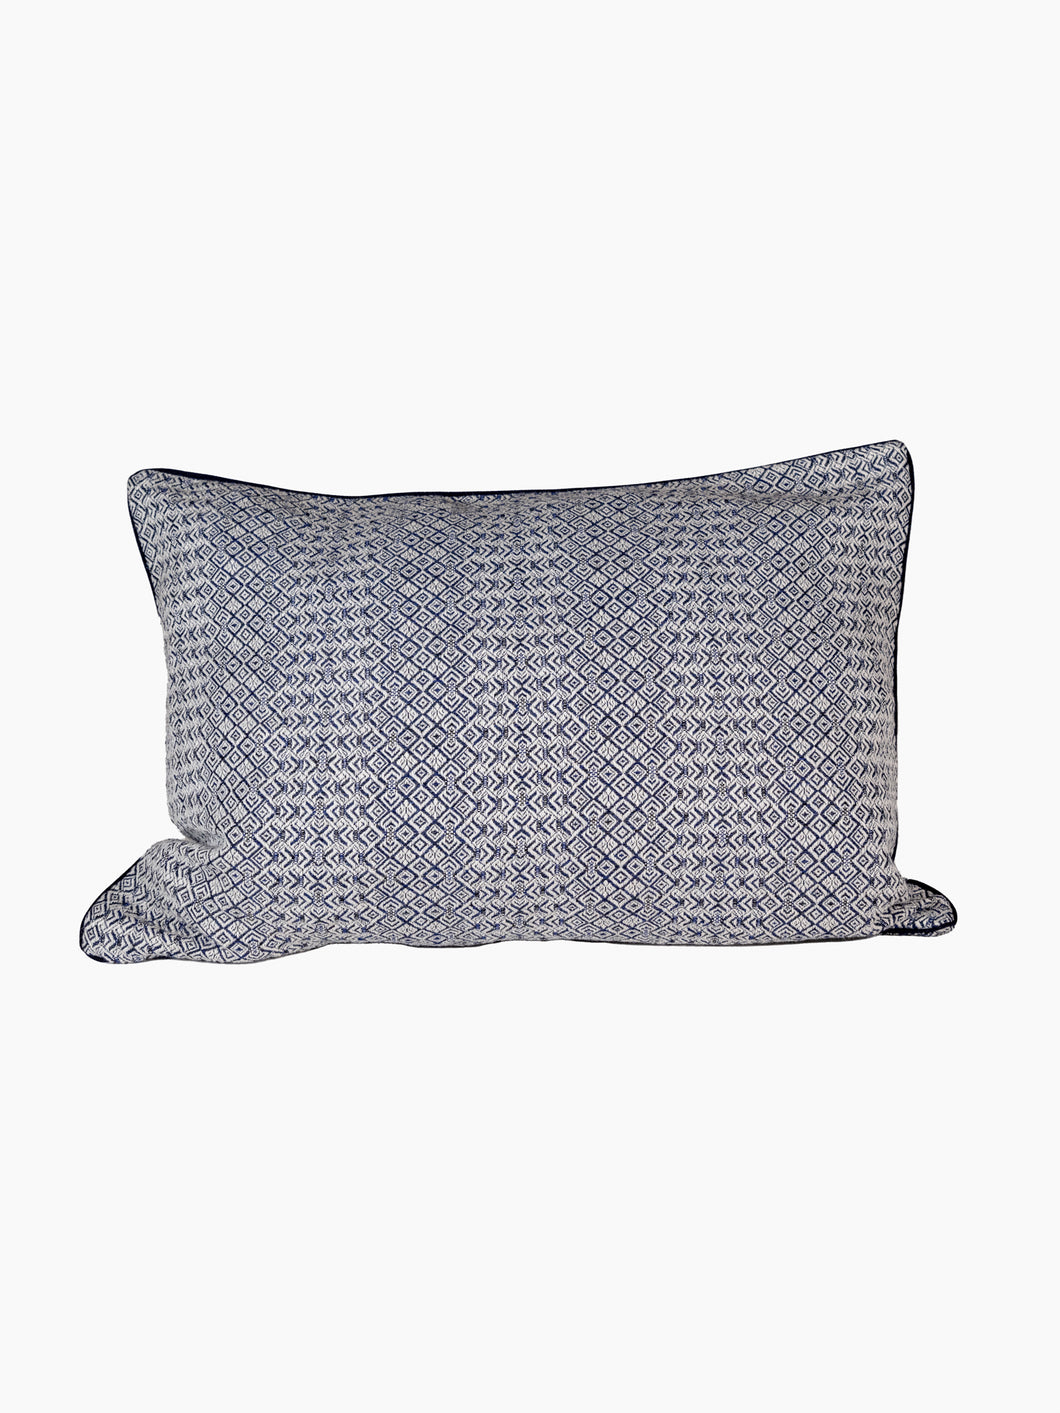 Intreccio Cushion Cover in Eclisse Blue